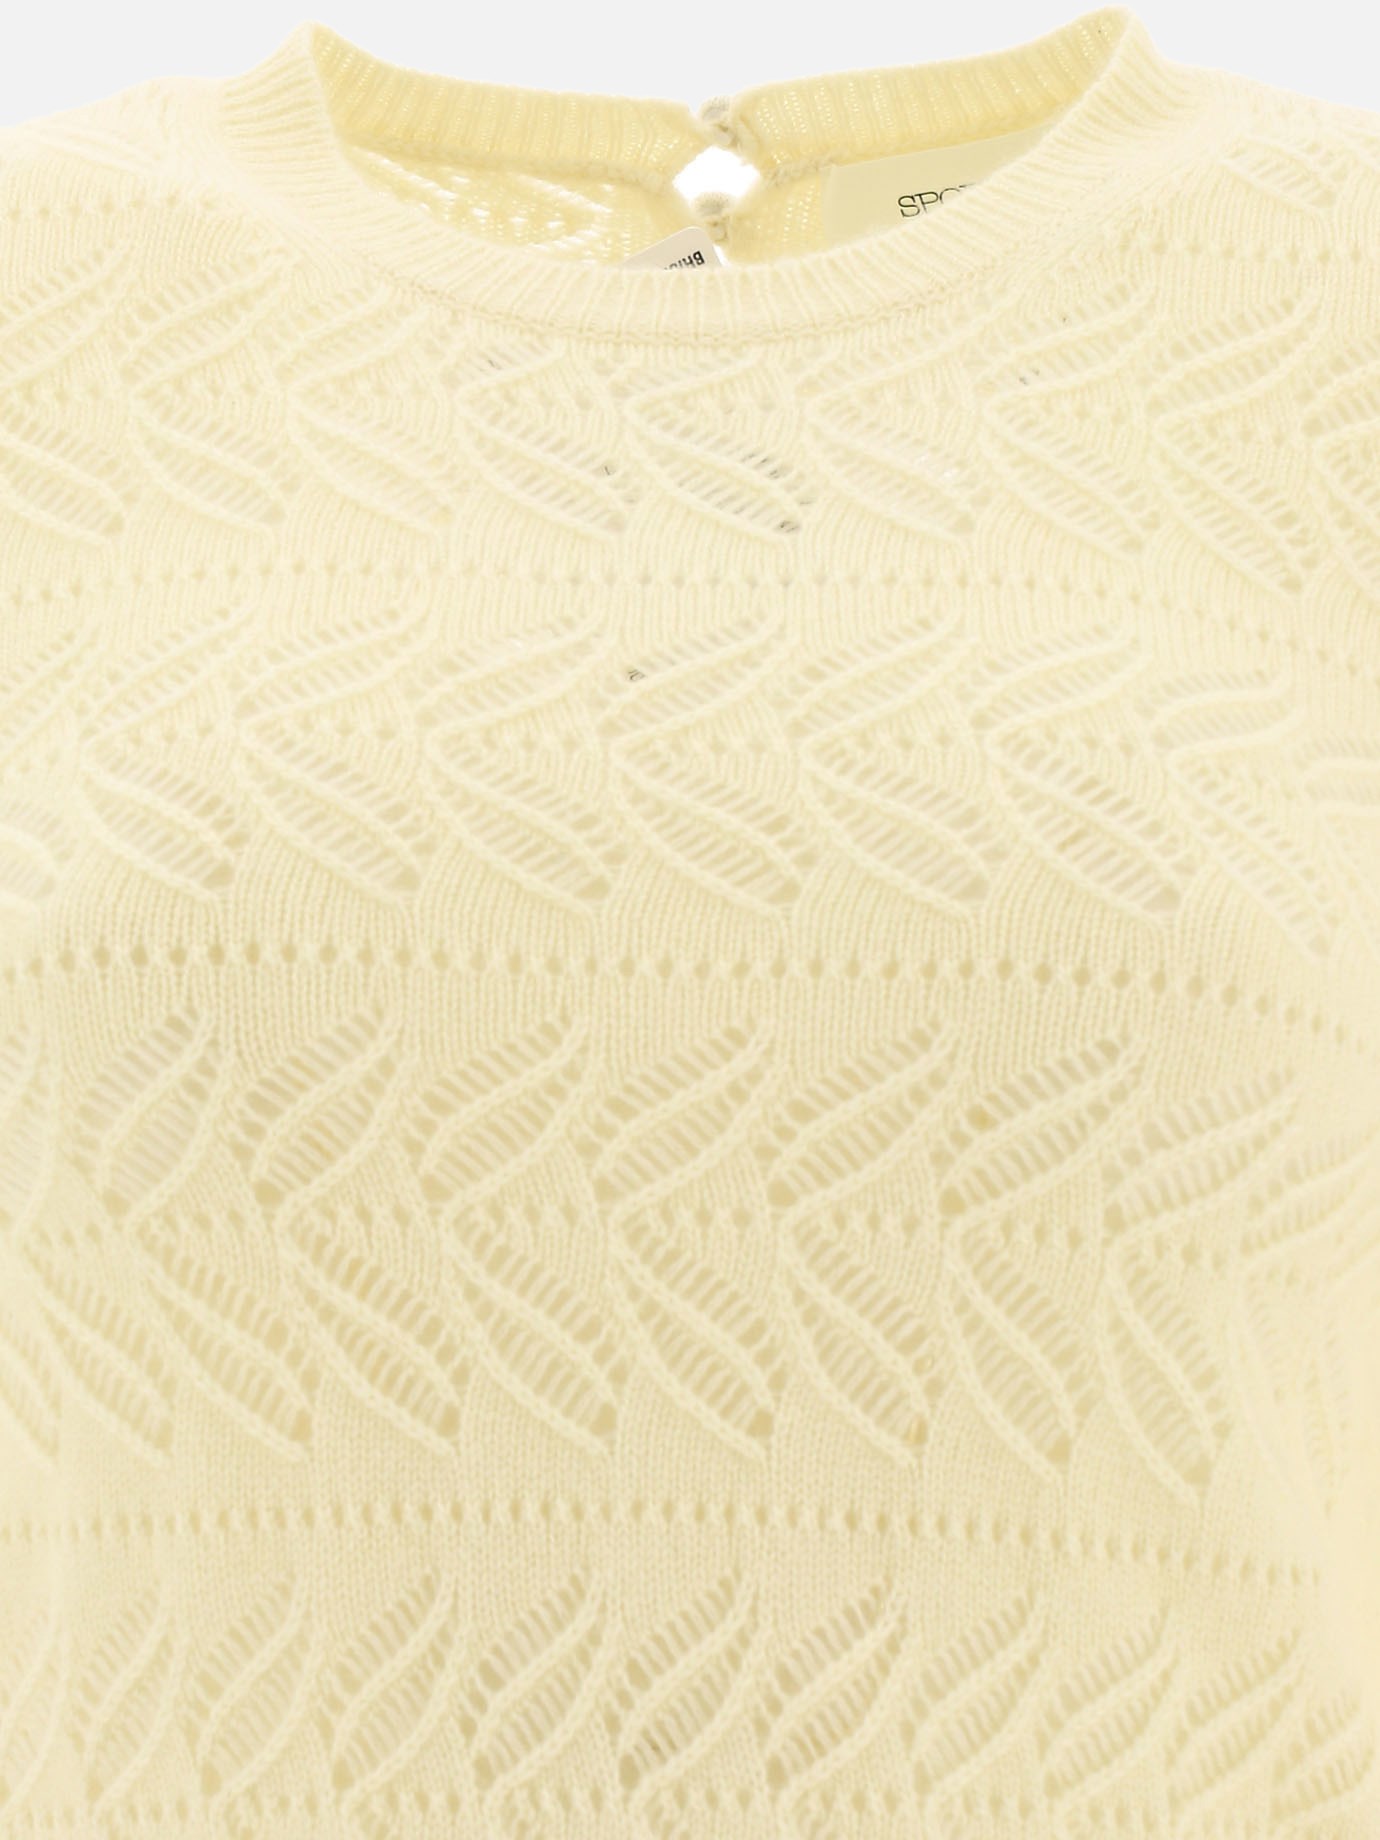  Briose  sweater by Max Mara Sportmax